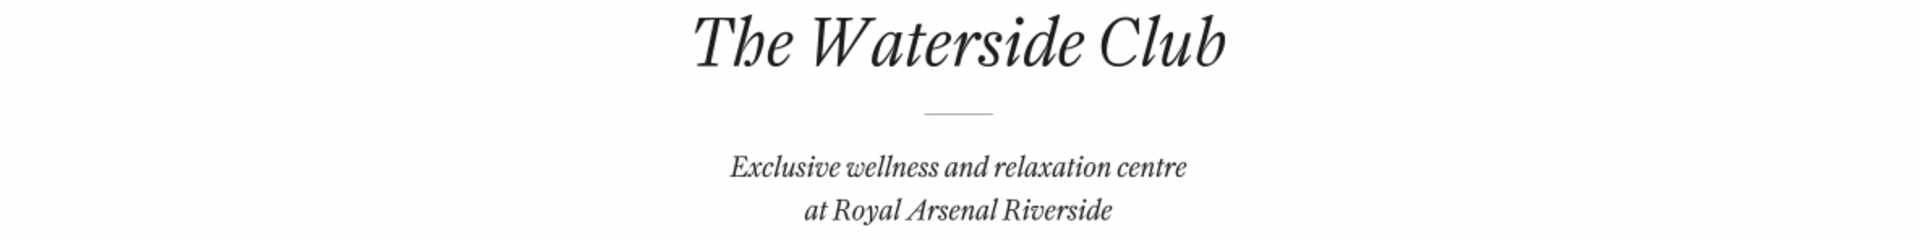 Royal Arsenal Riverside, The Waterside Club